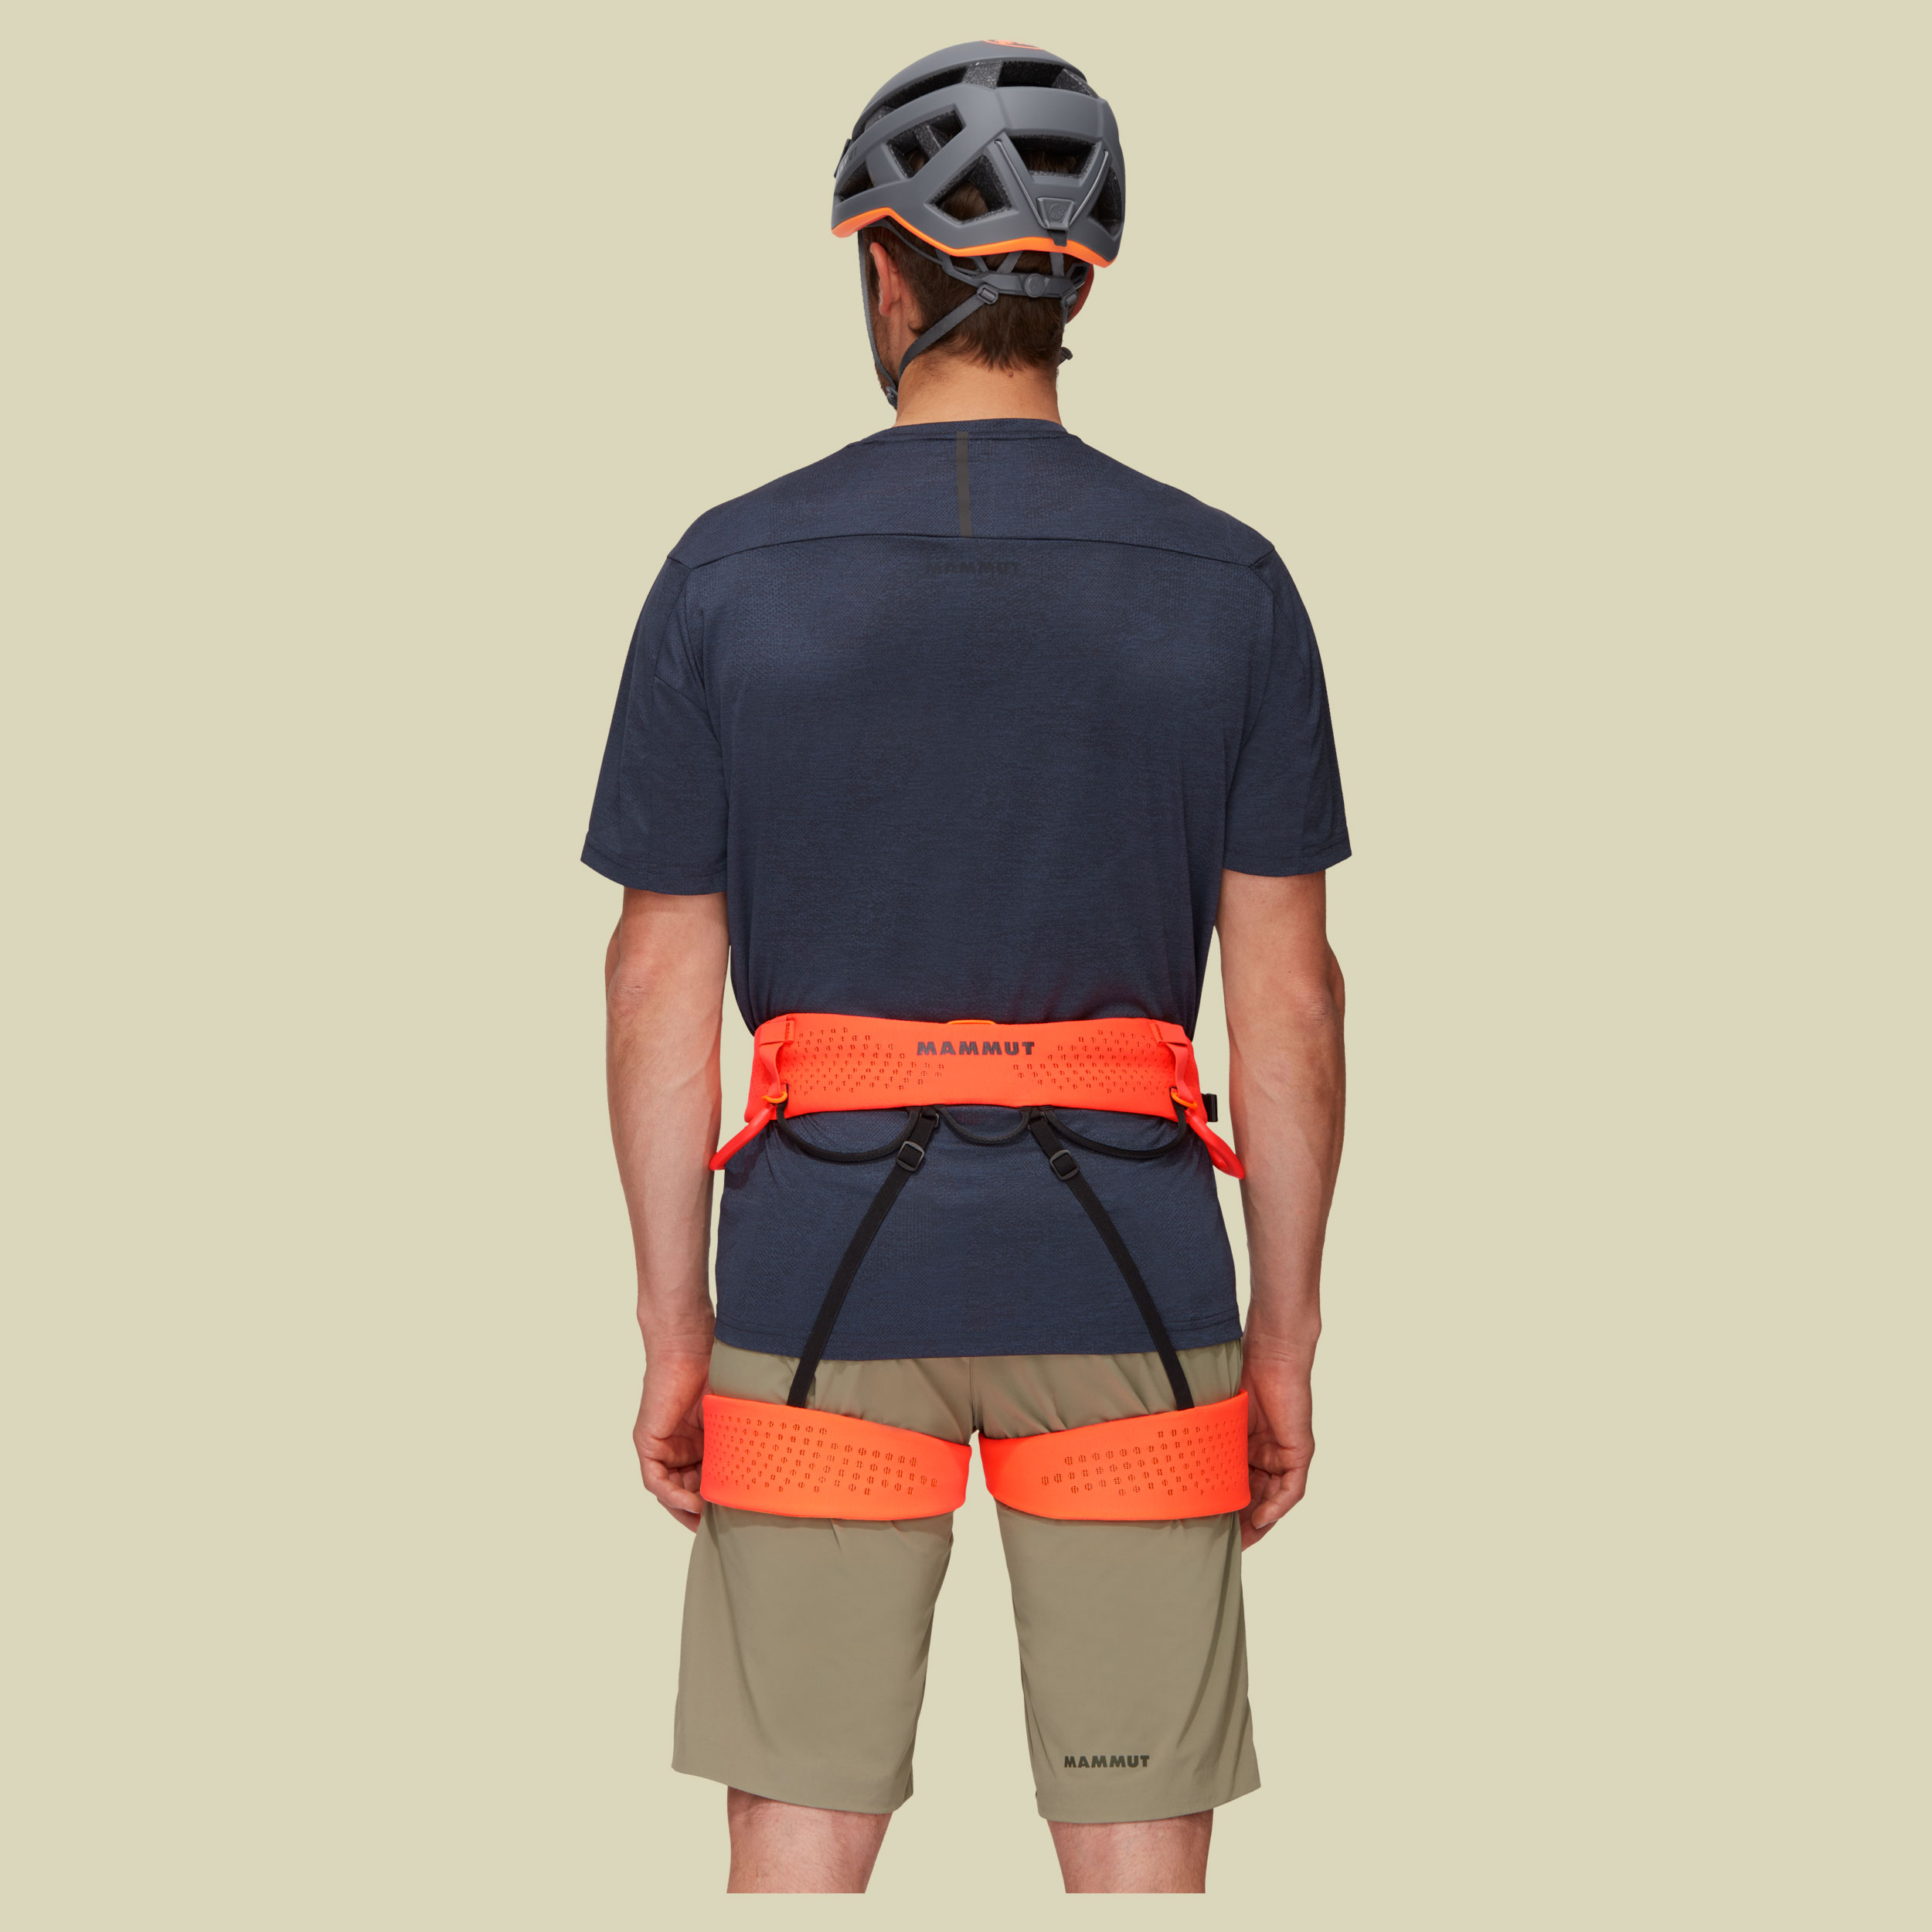 Sender Harness Länge L Farbe safety orange